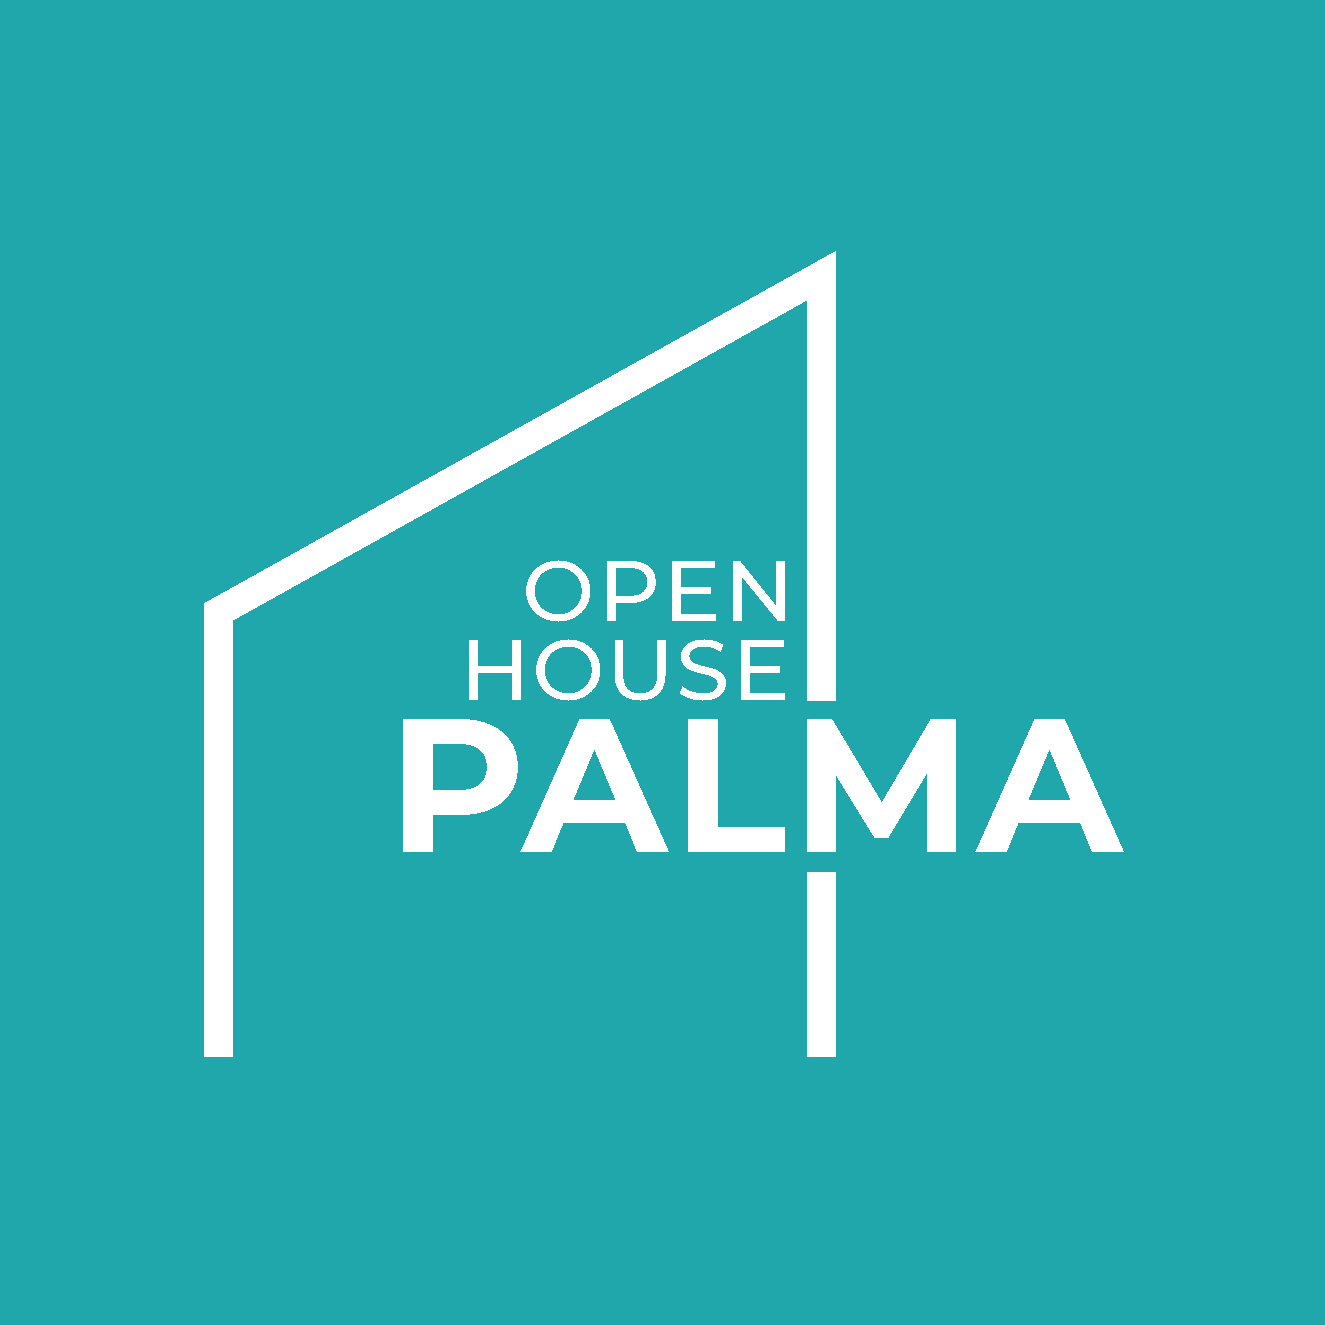 OPEN HOUSE PALMA